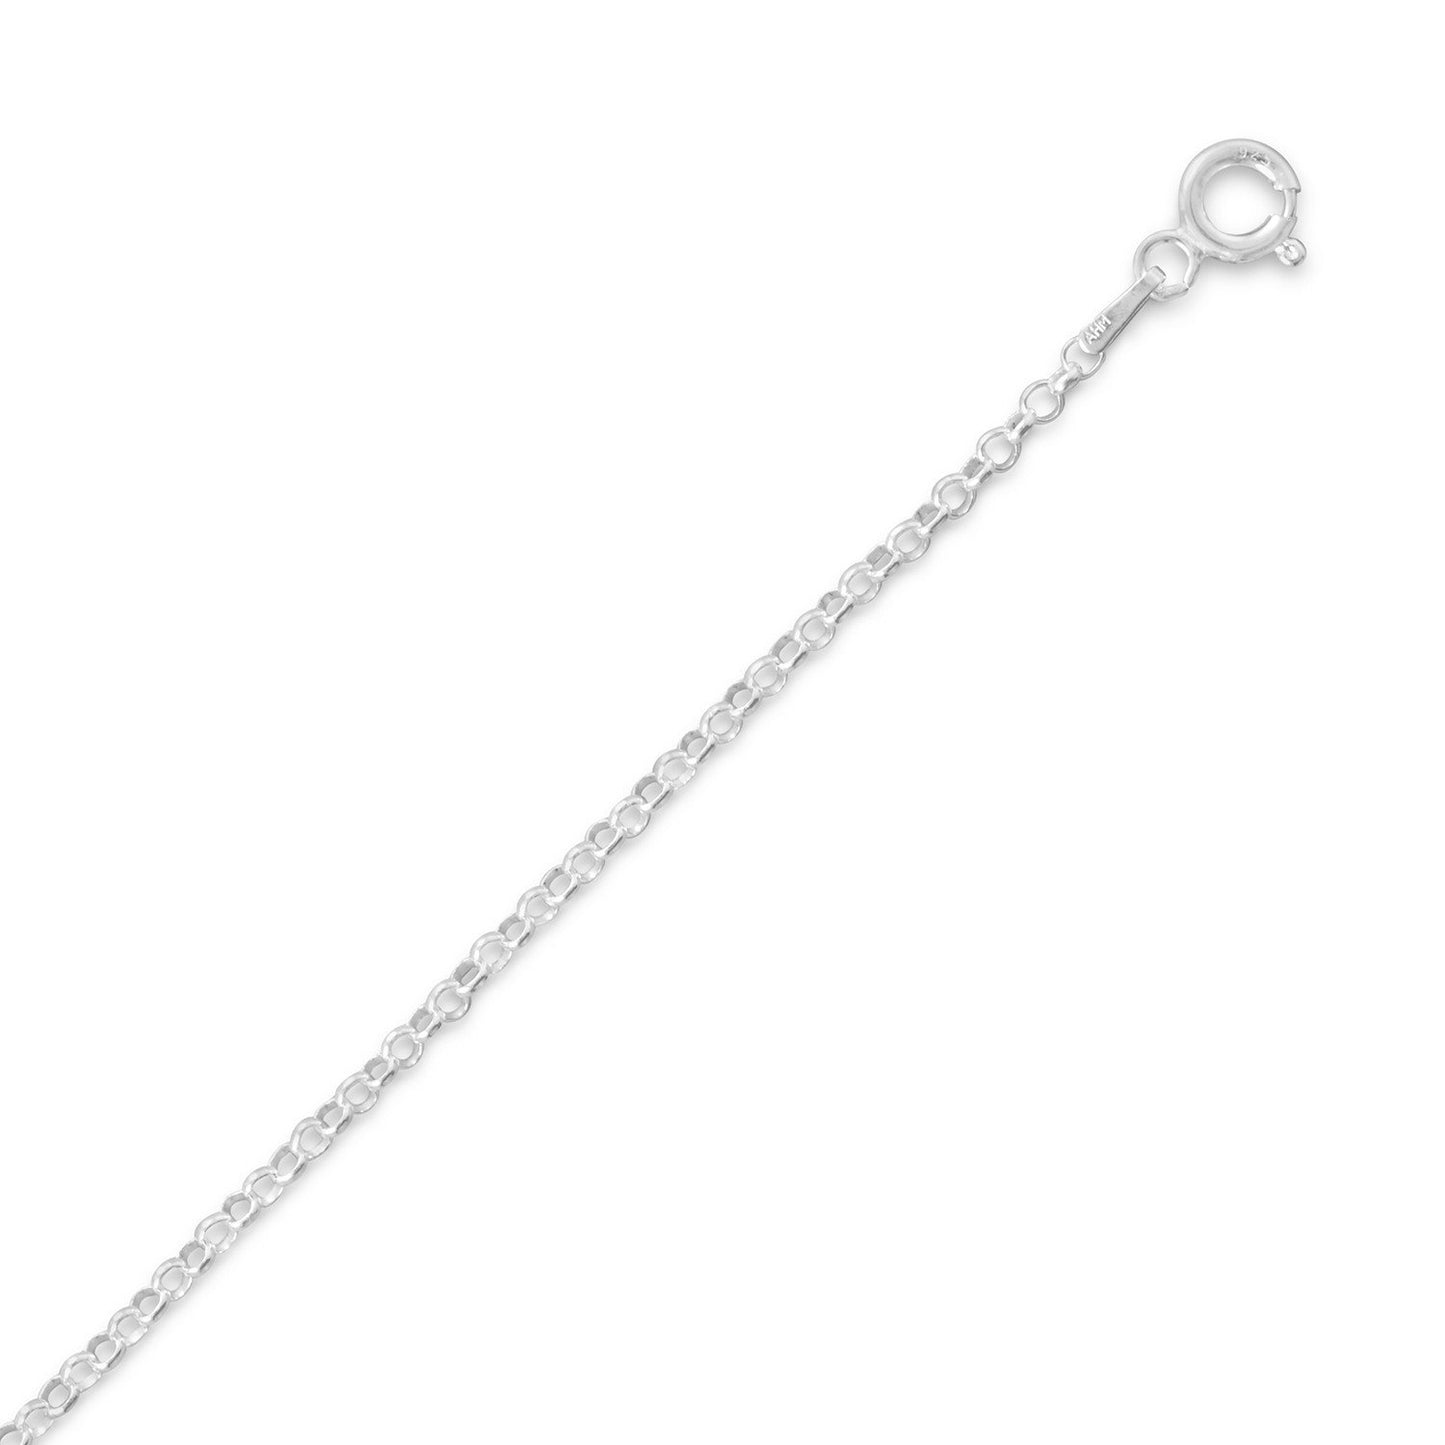 Precious Stars Sterling Silver 2 mm Rolo Chain Necklace (16)